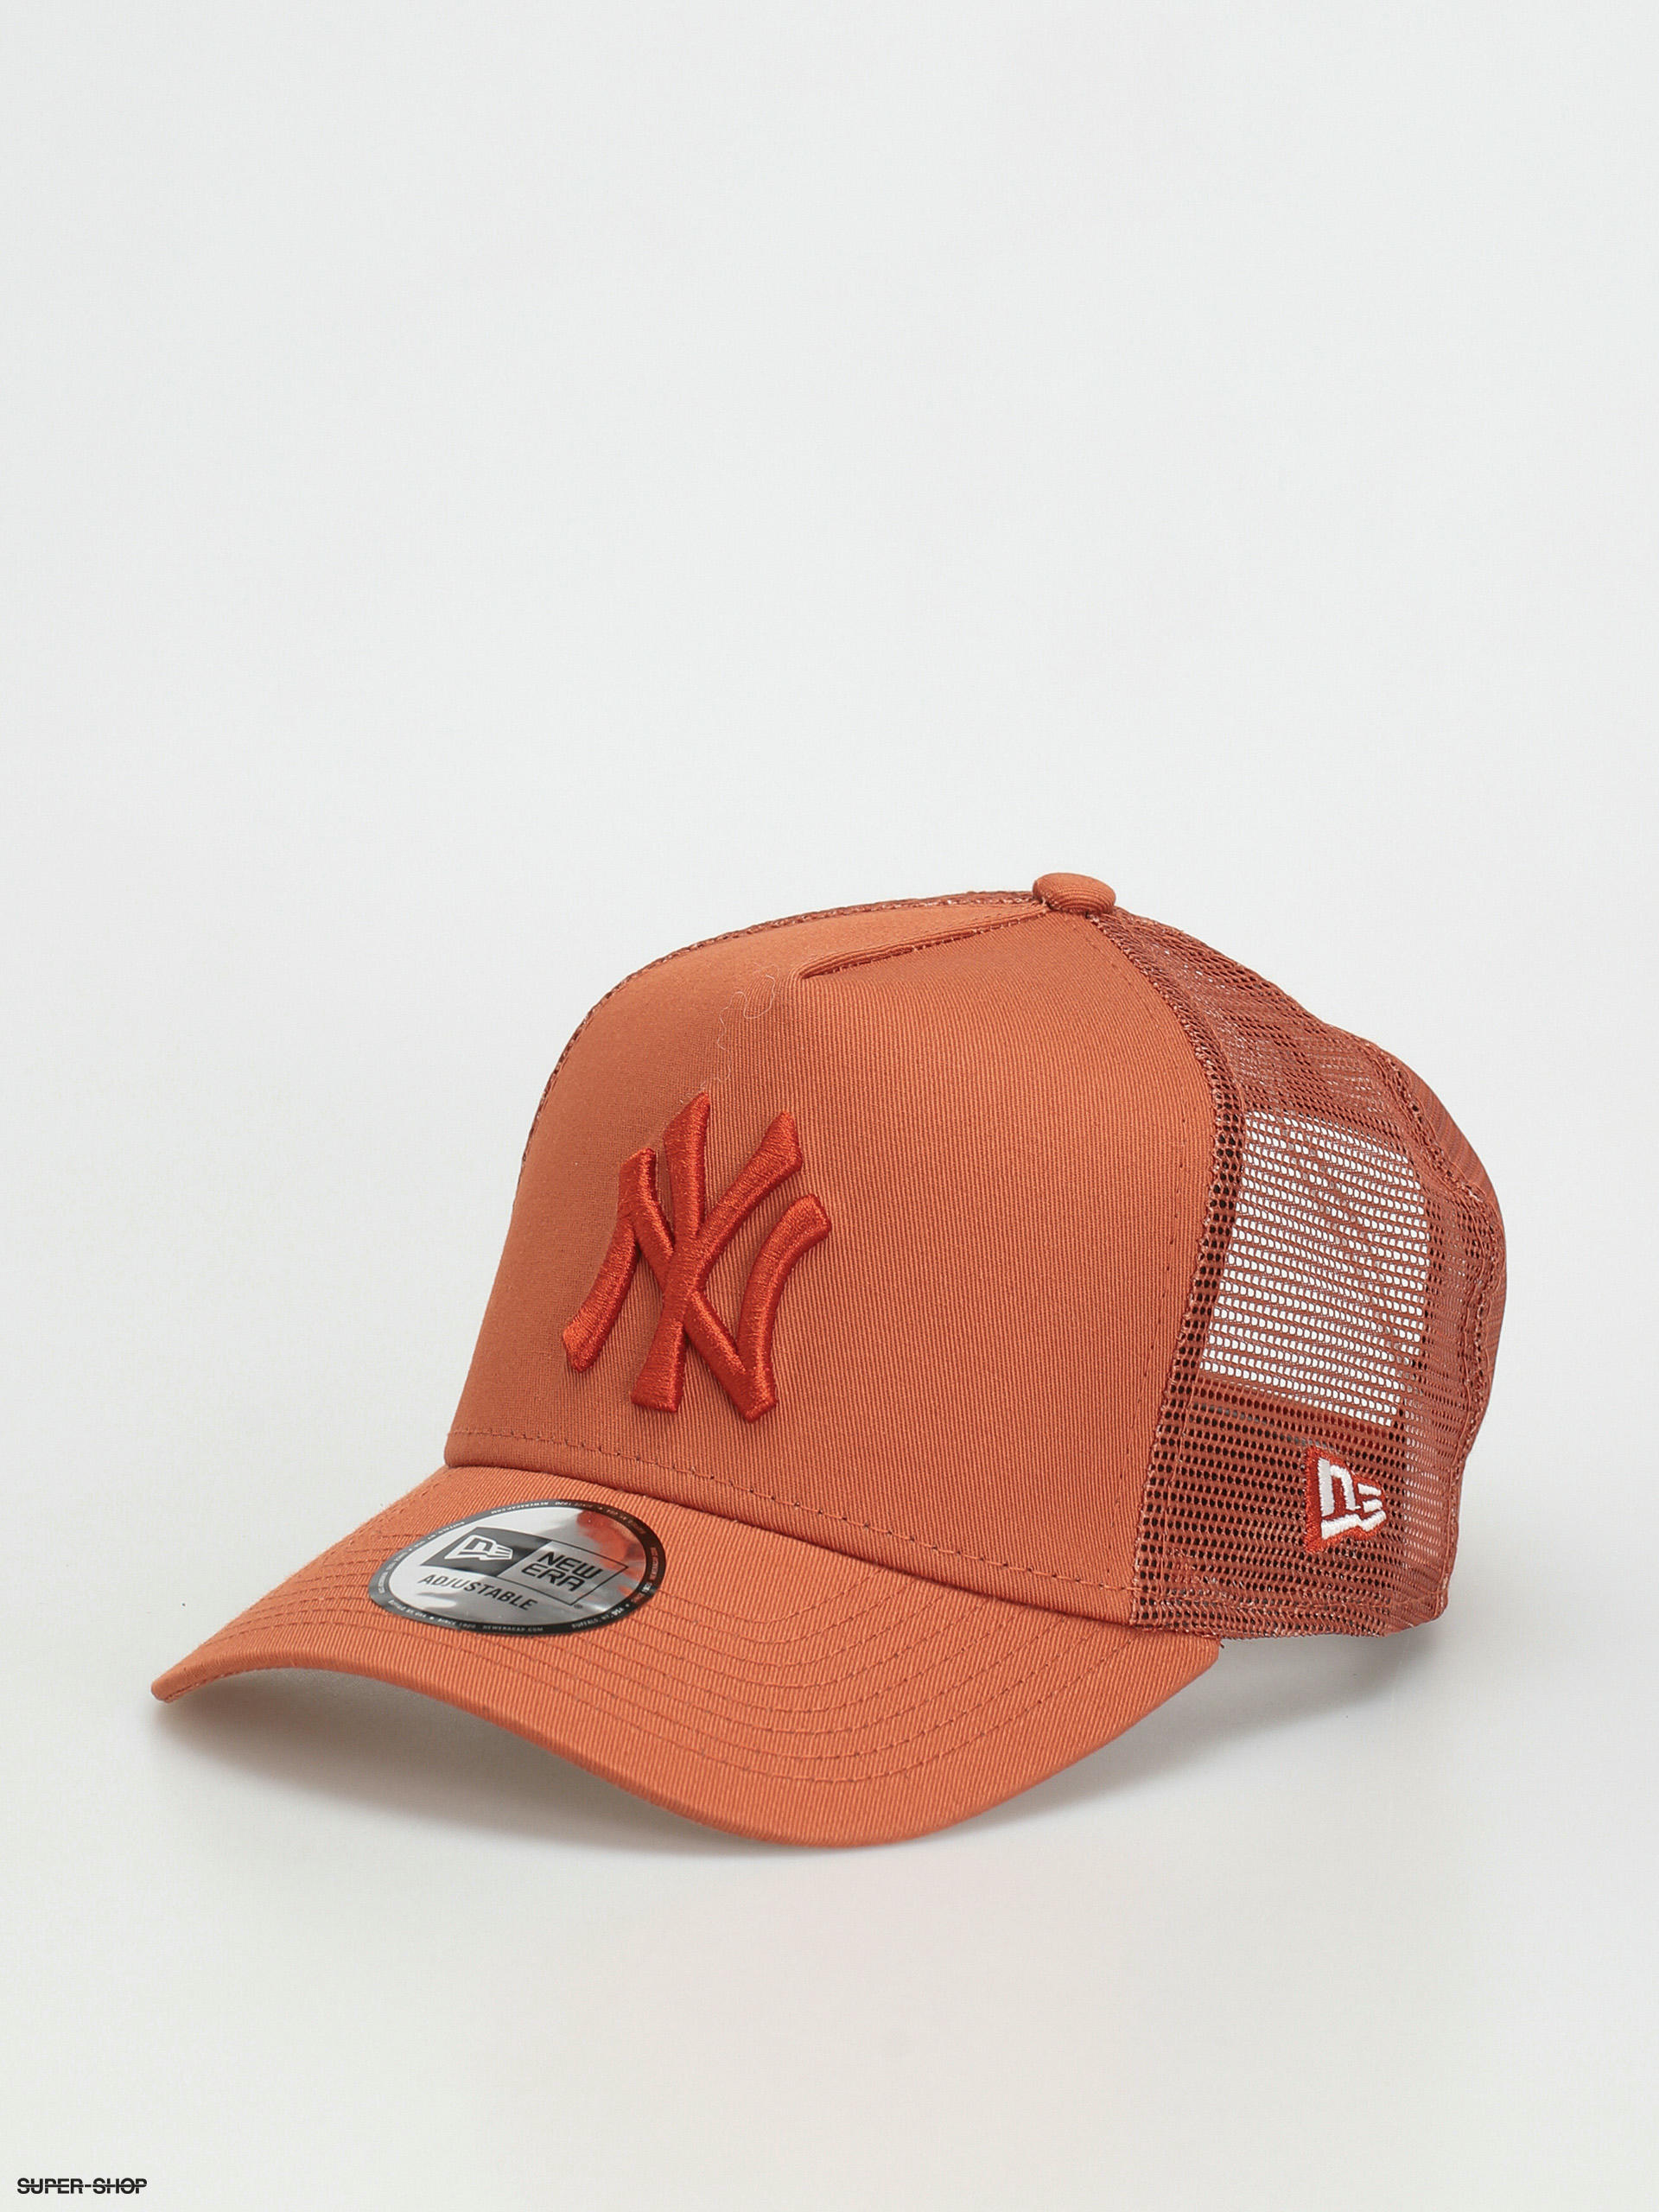 Shop New Era MLB NY Yankees Mesh Trucker Cap in Orange